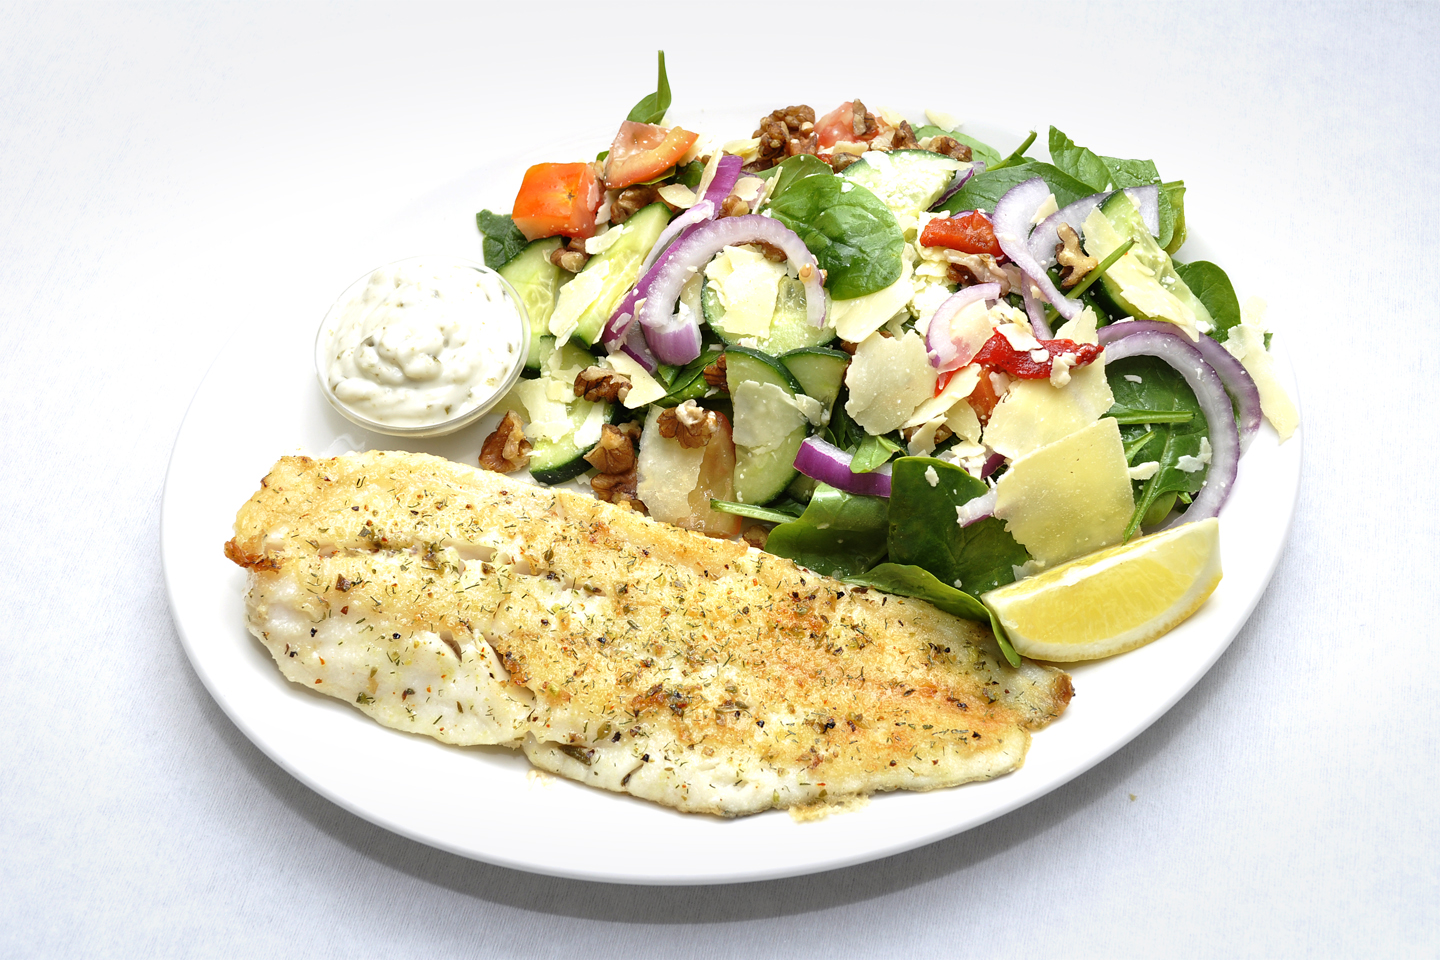 Food Photography Melbourne - Fish & Salad photo